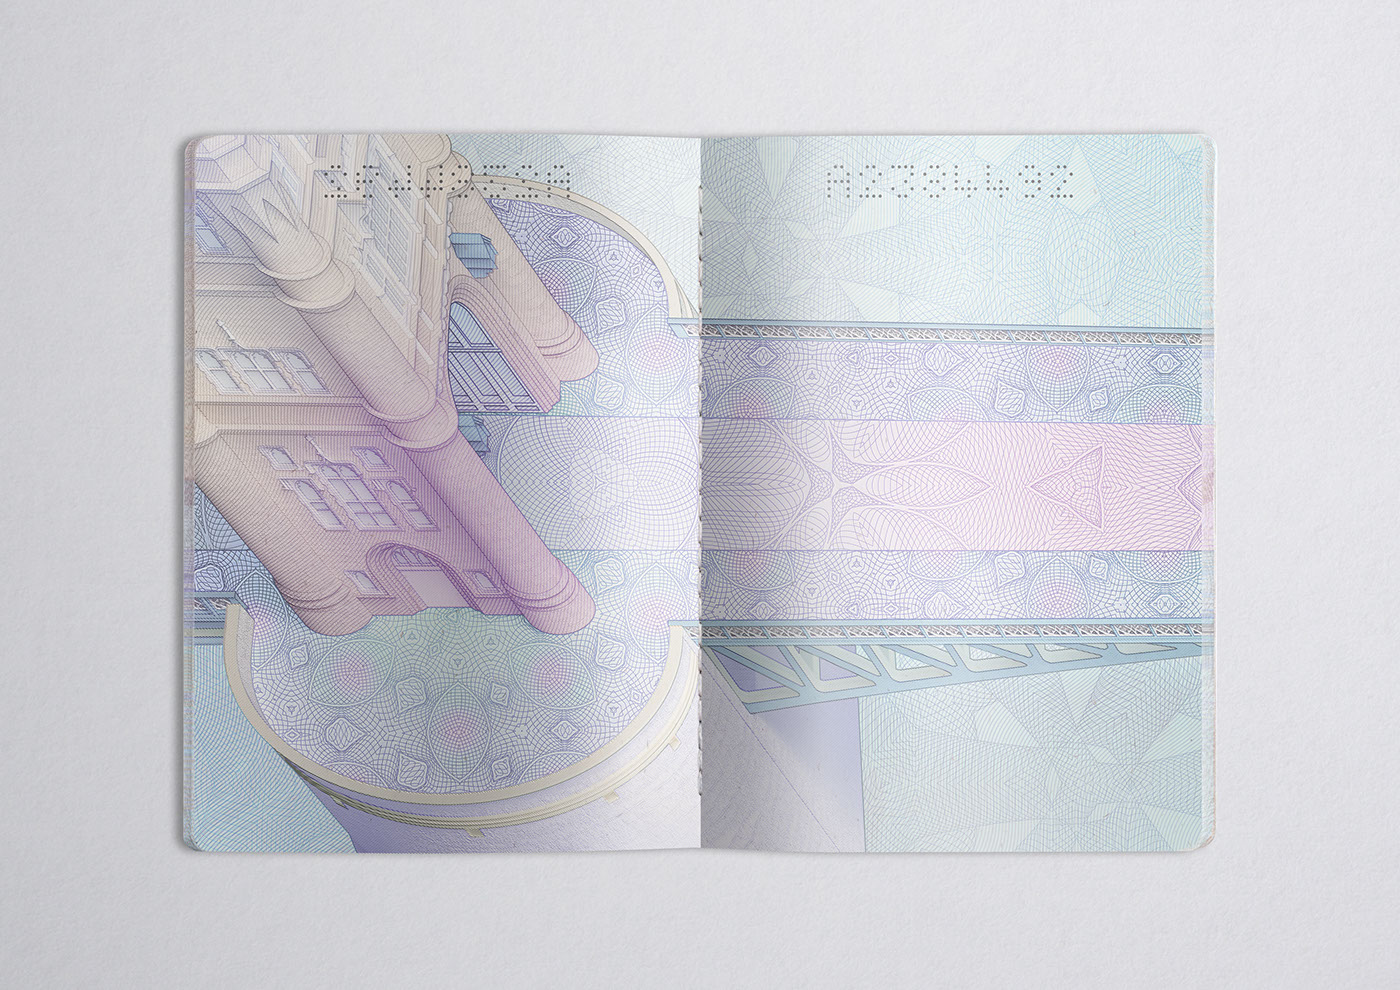 Passport guilloche dezeen Brexit certificate Banknote Spirograph moire